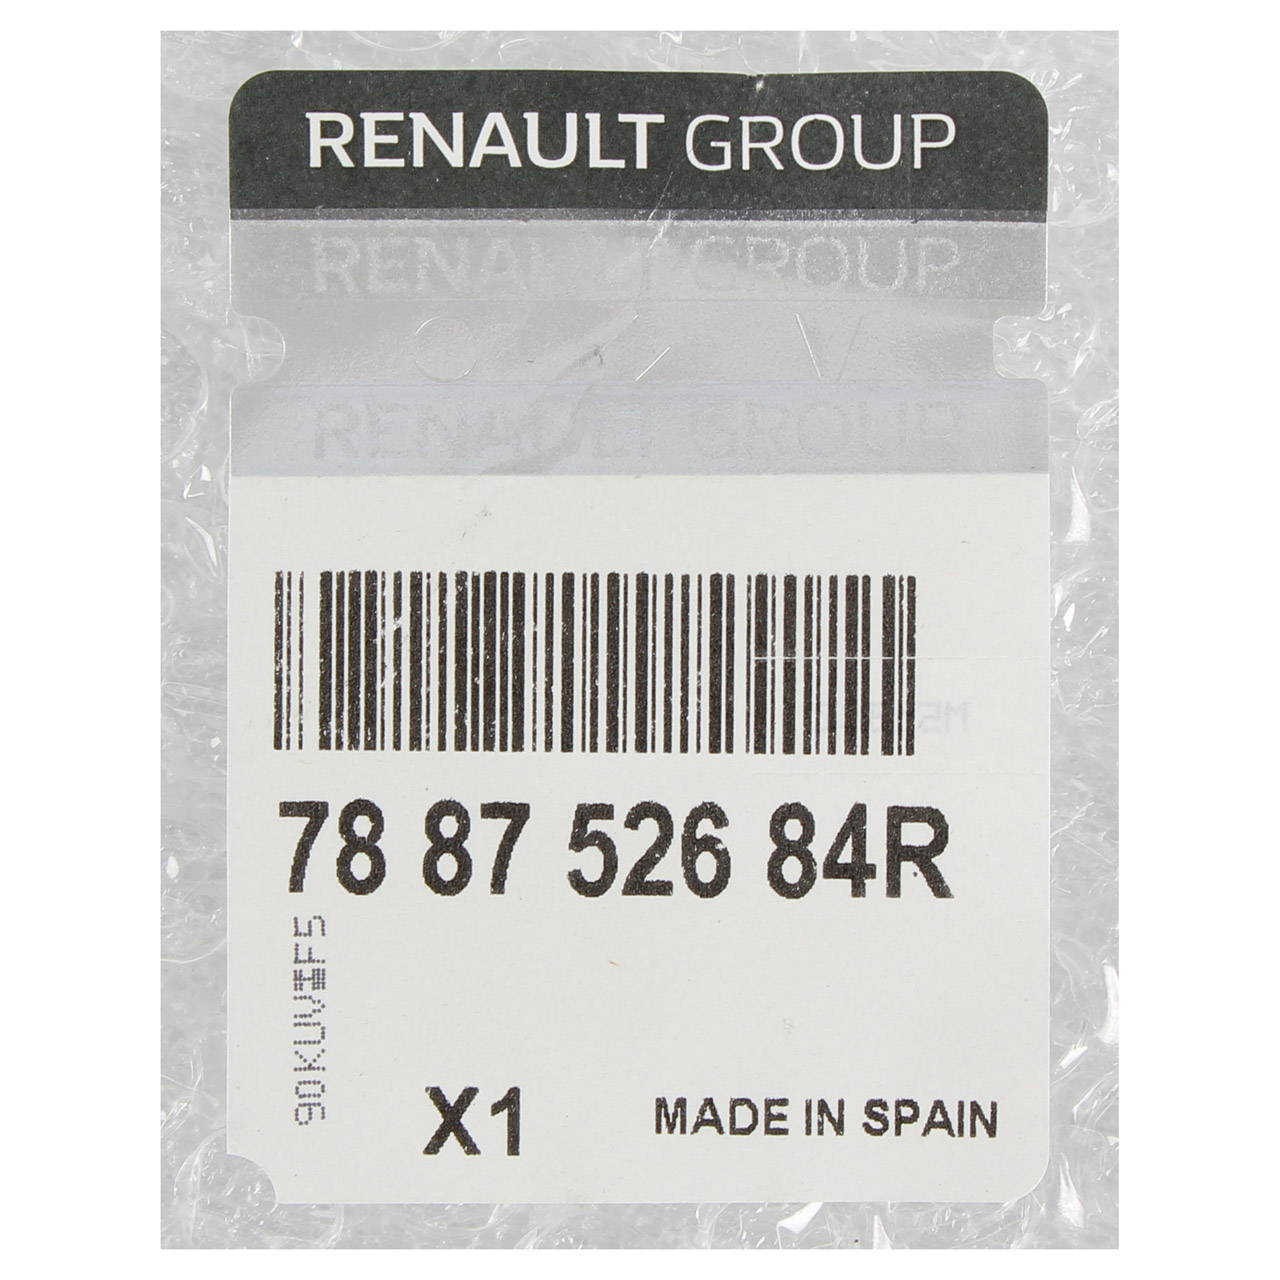 ORIGINAL Renault Verbreiterung Radlauf Kadjar hinten links 788752684R